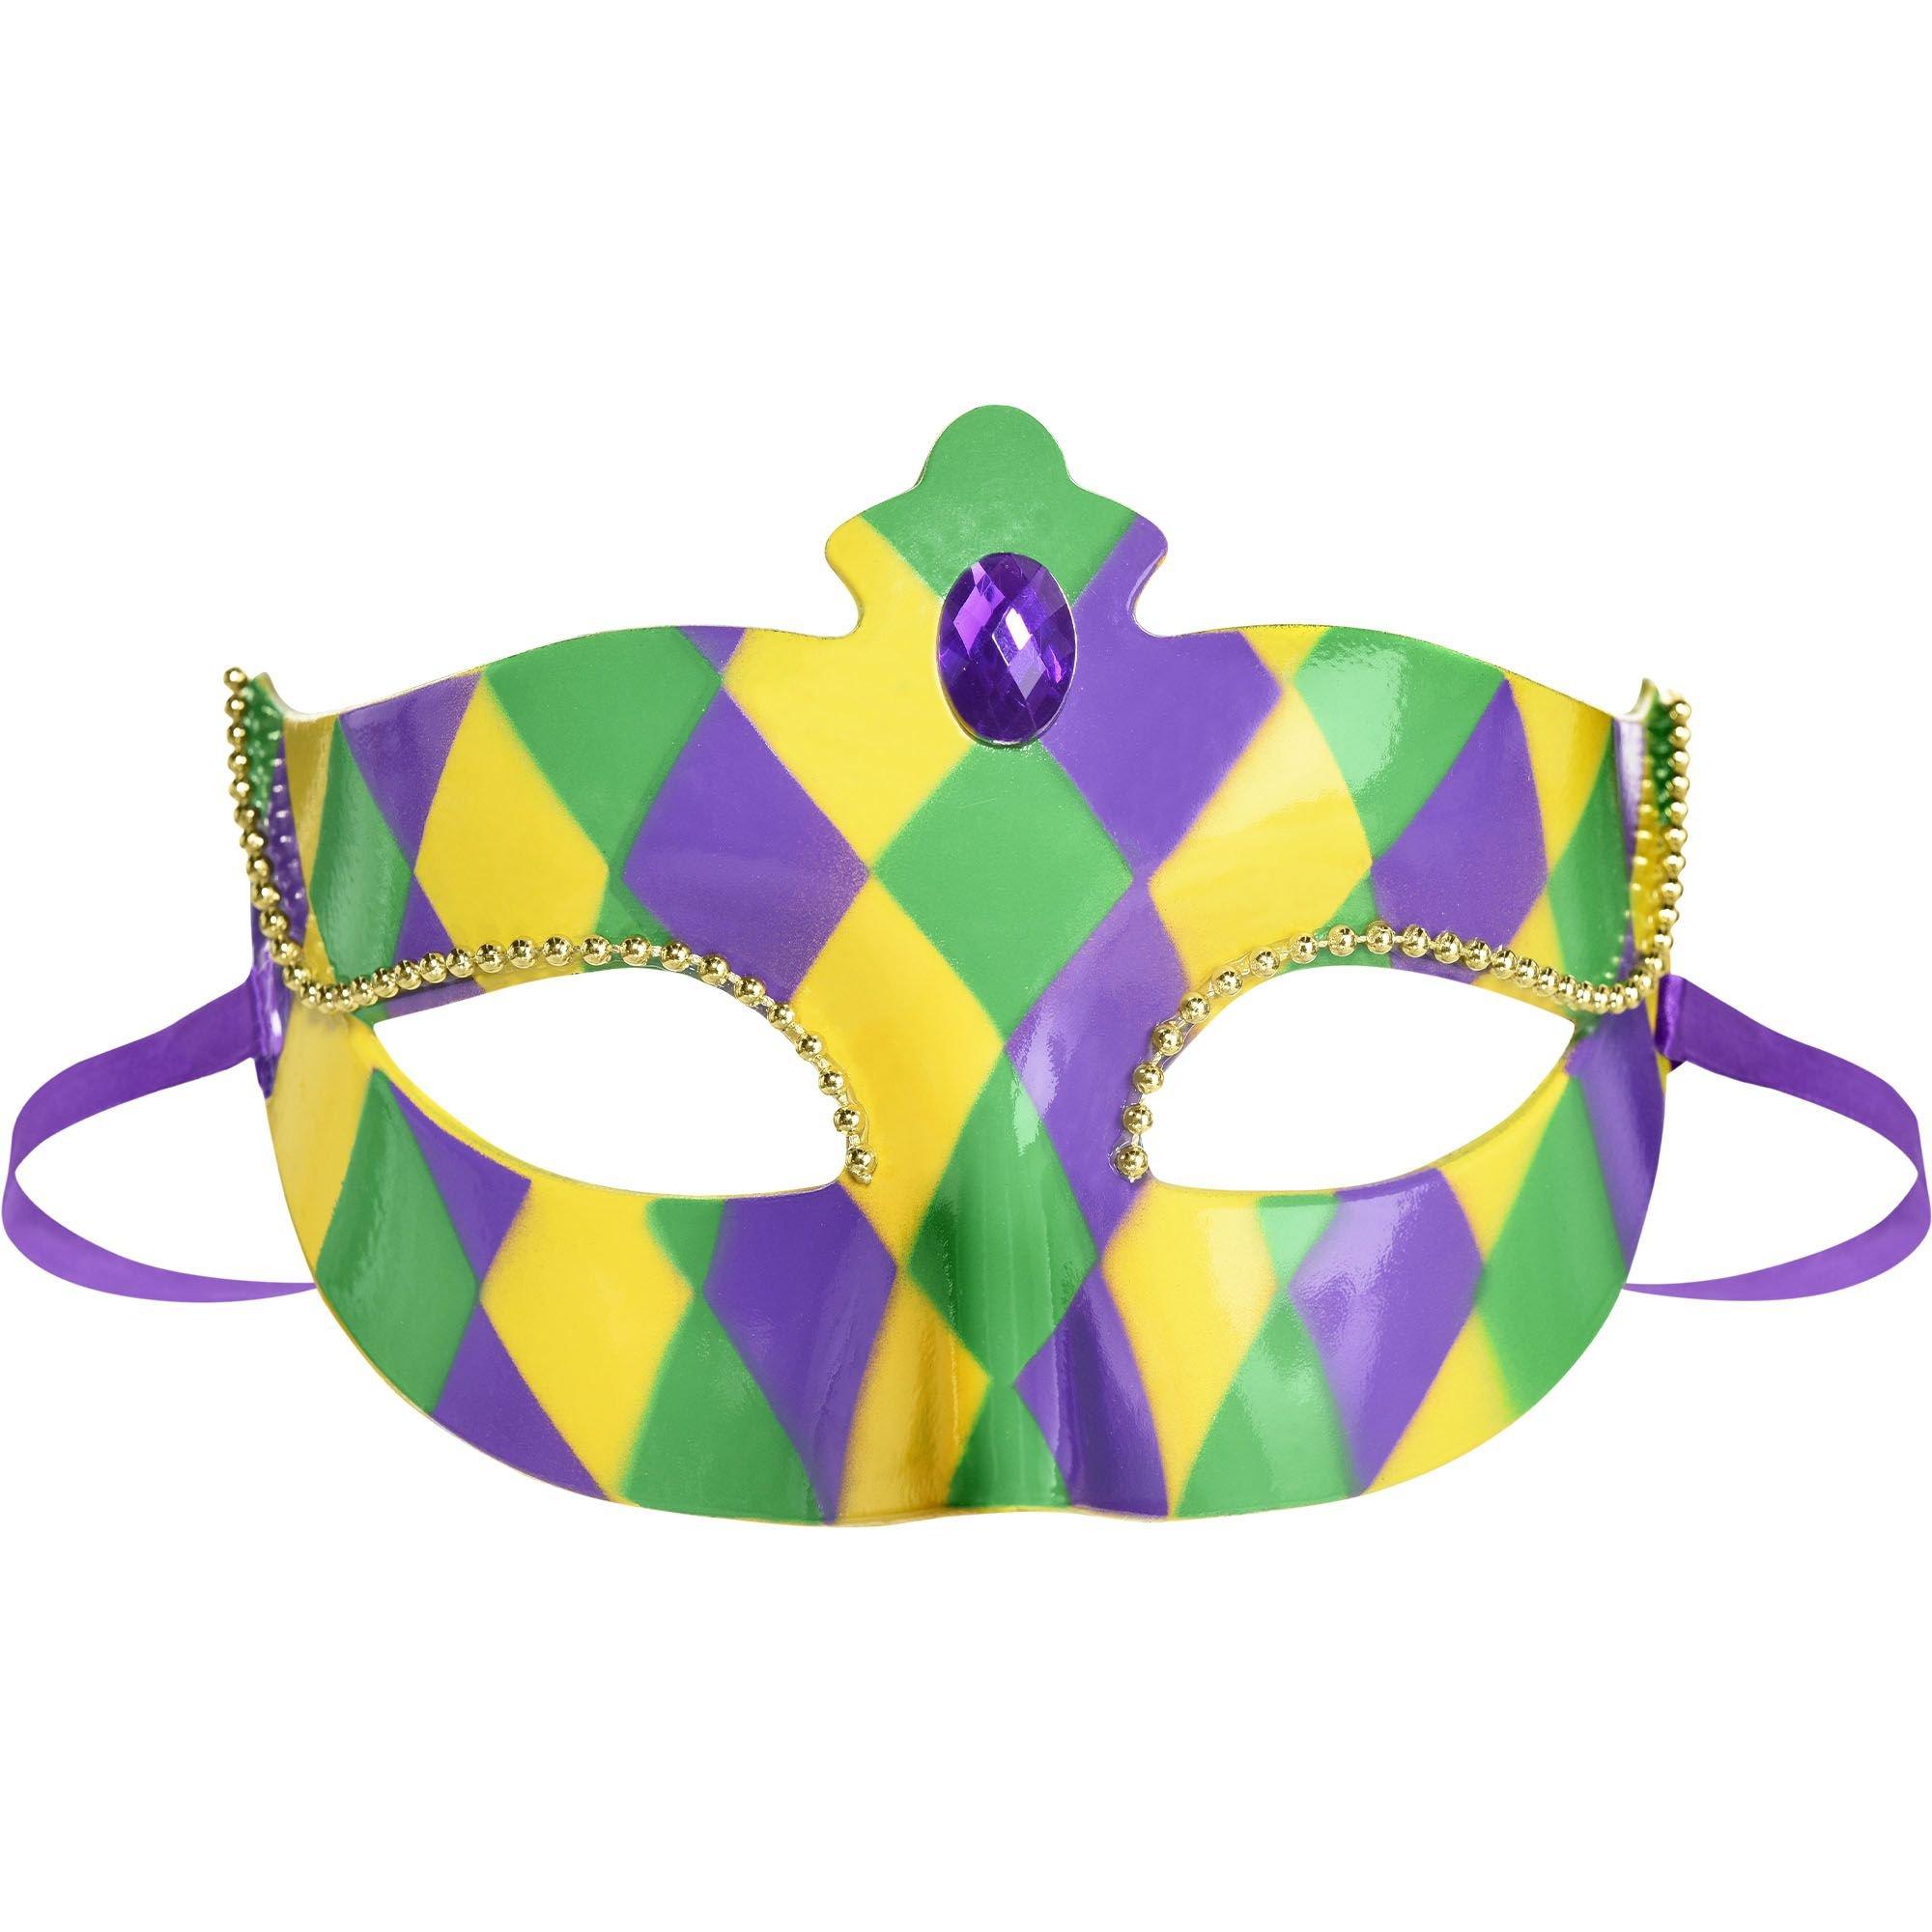 masquerade masks clip art purple